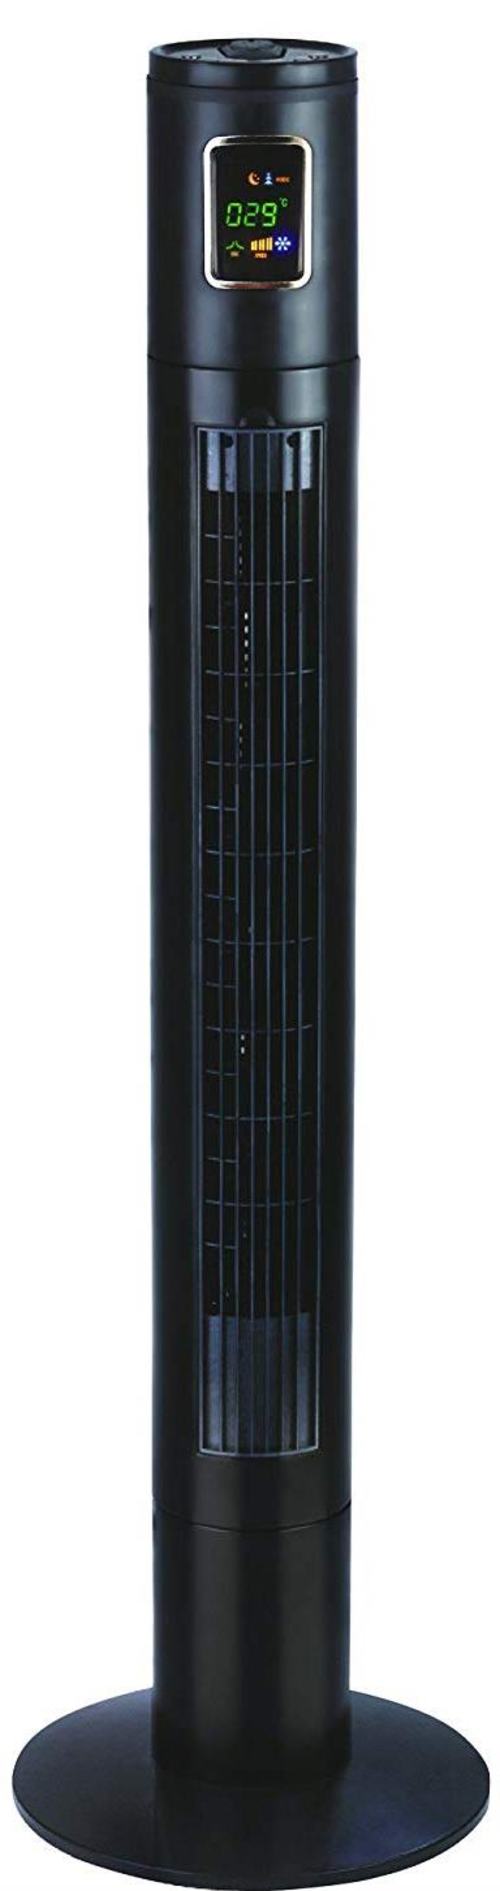 Royal Sovereign TFN-45D 45-inch Digital Tower Fan - Black